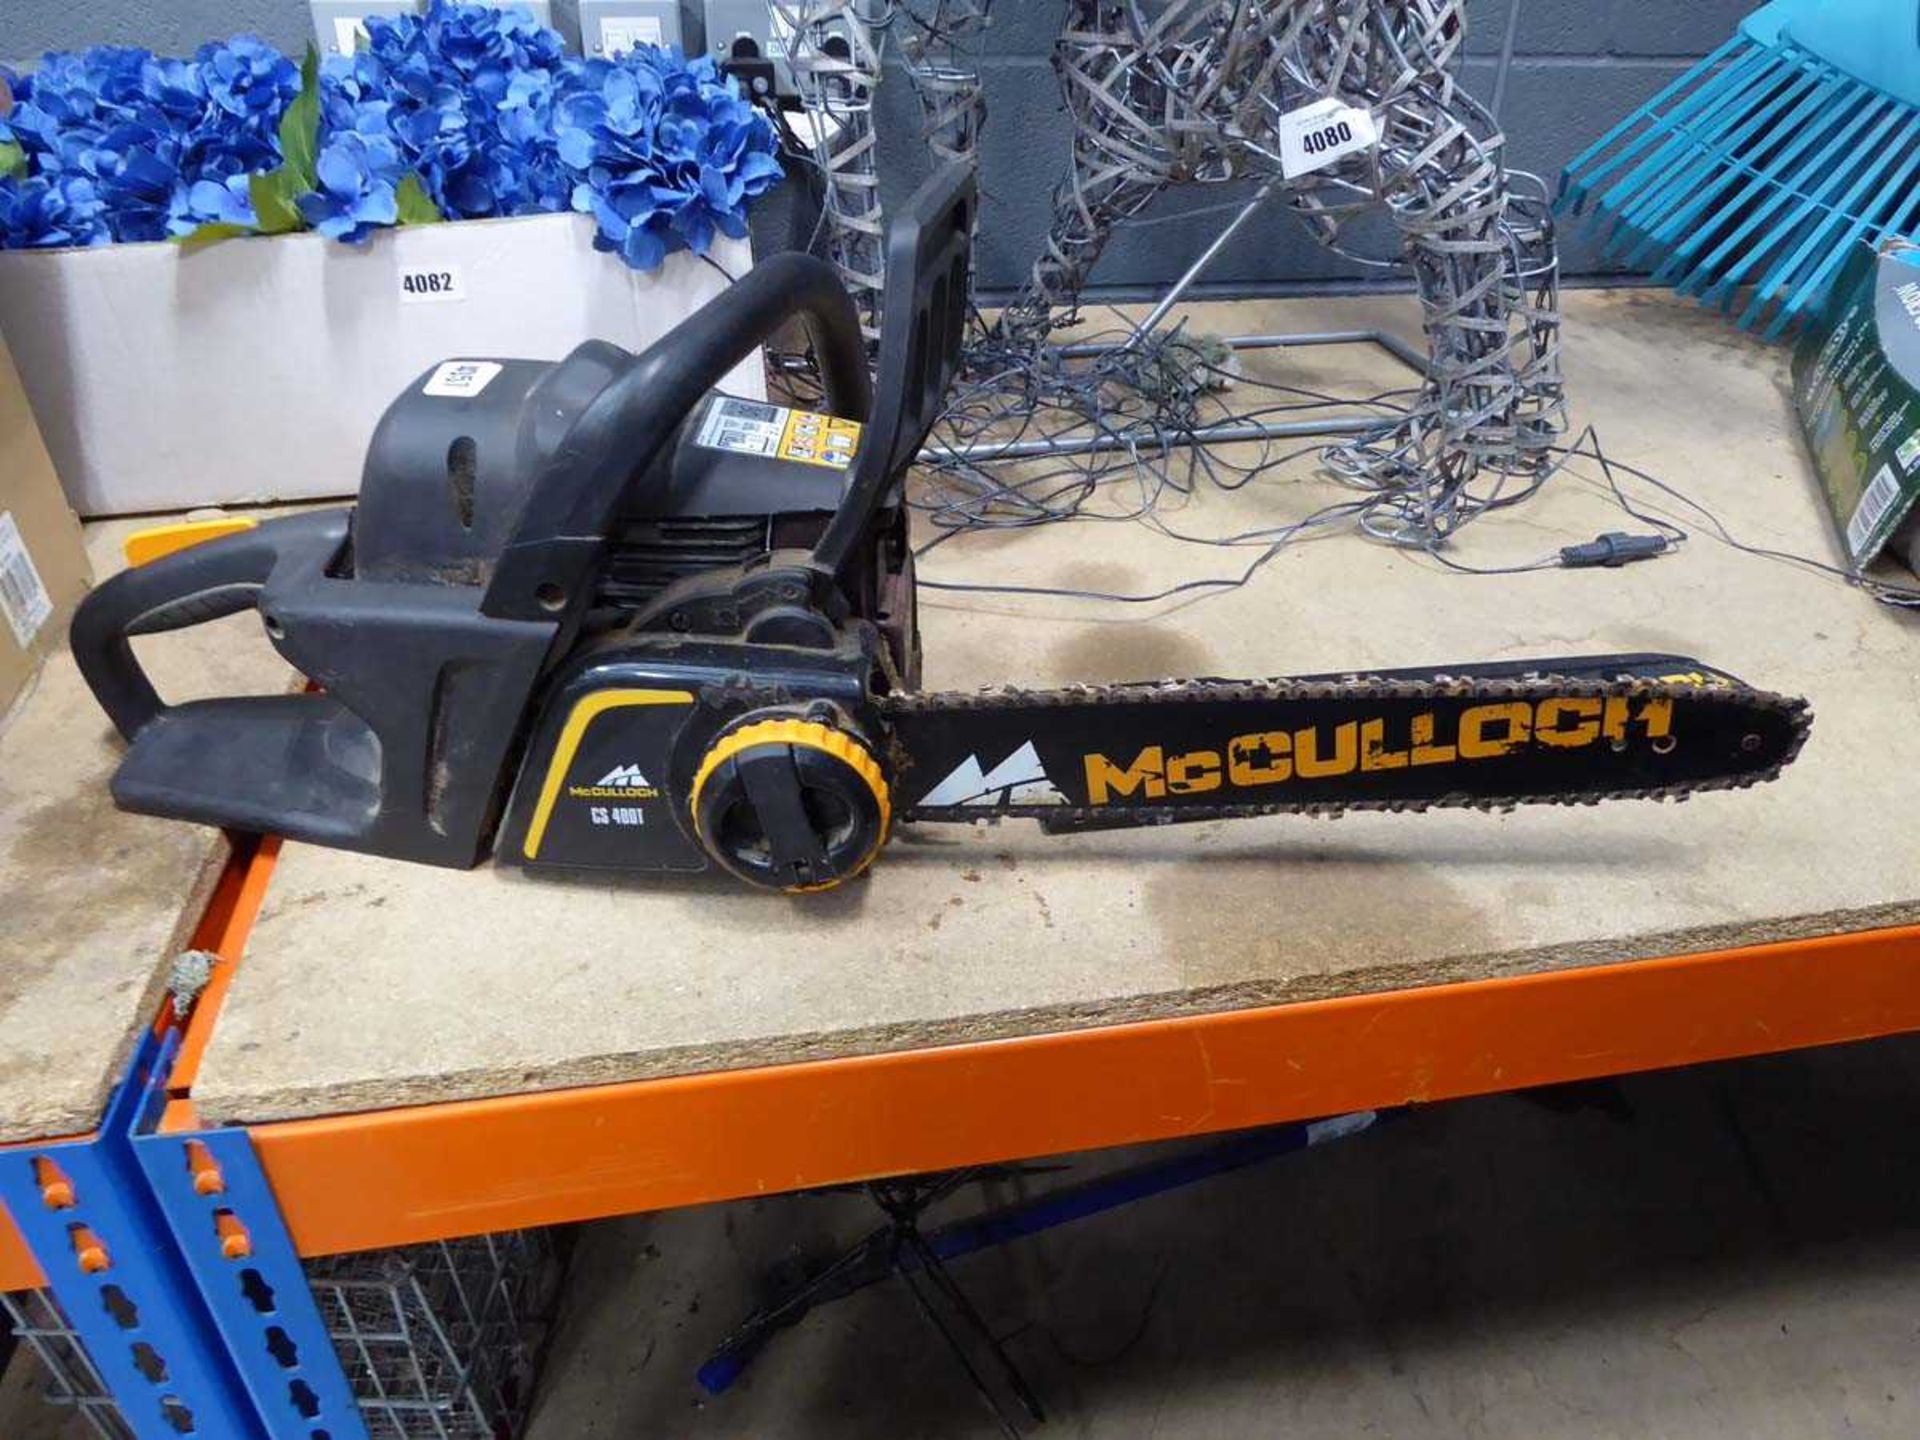 McCullough petrol powered chainsaw